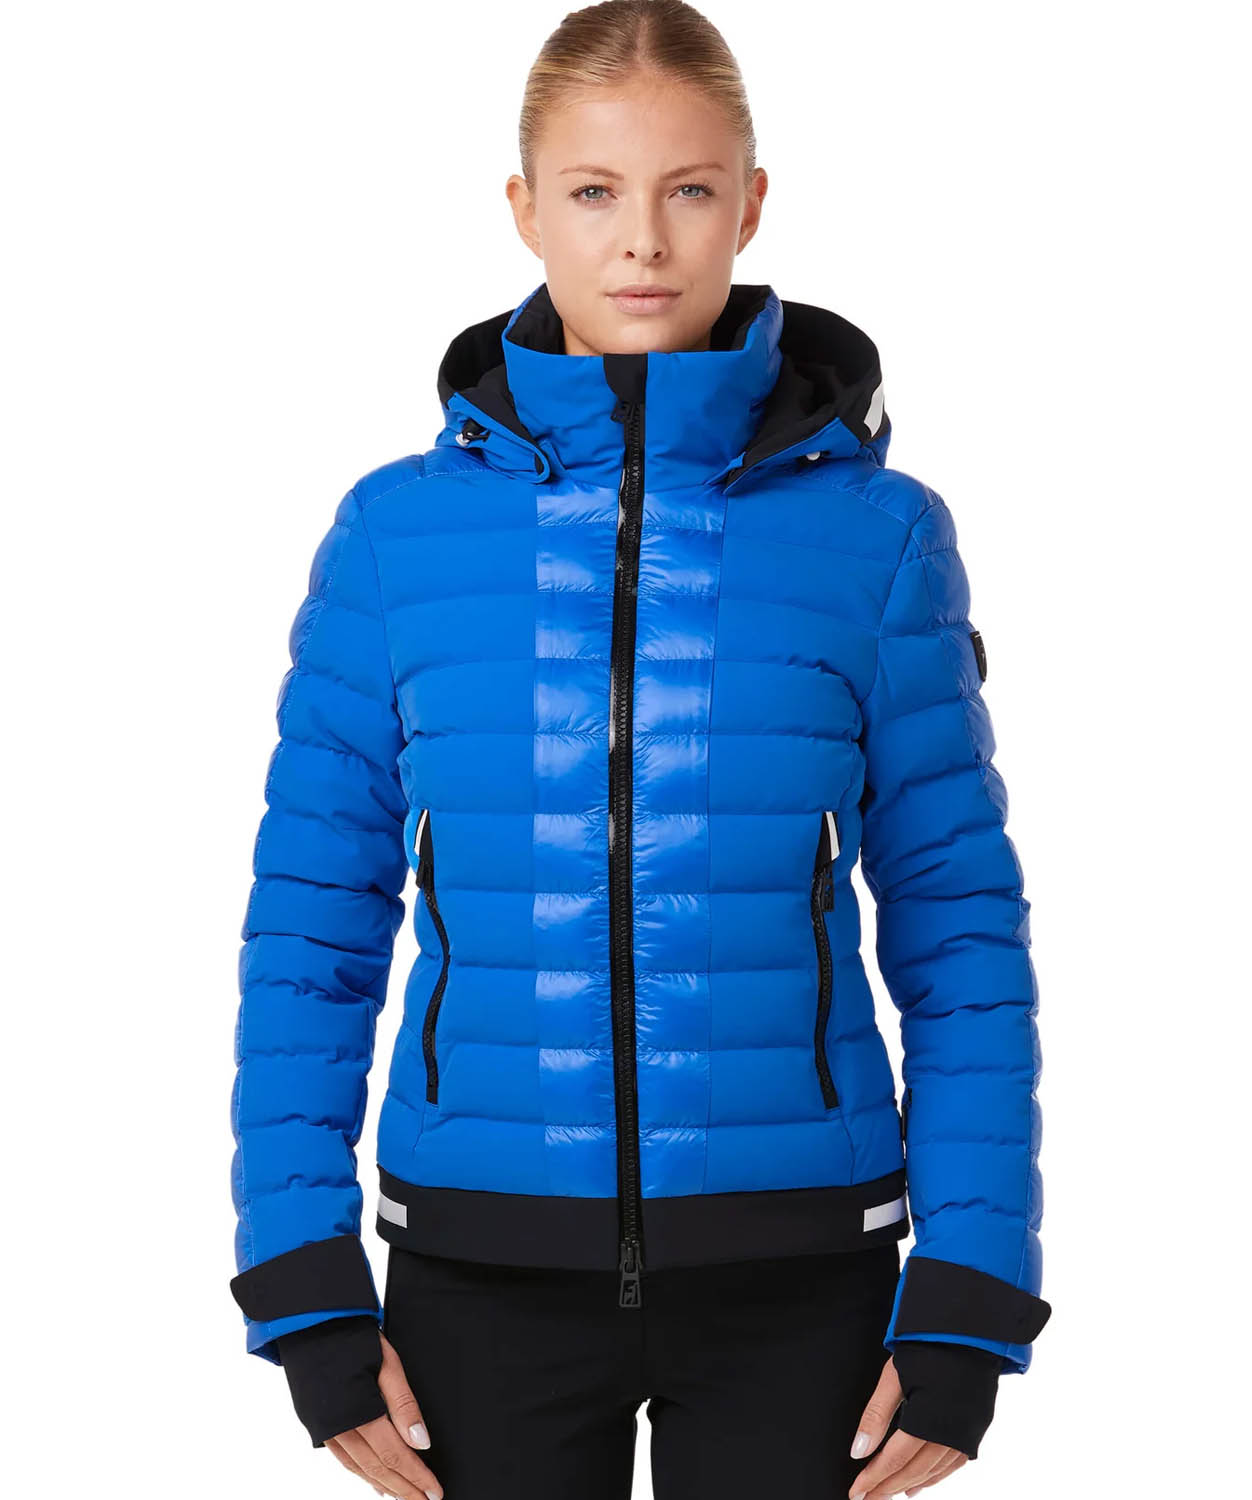 Women's Norma Ski Jacket